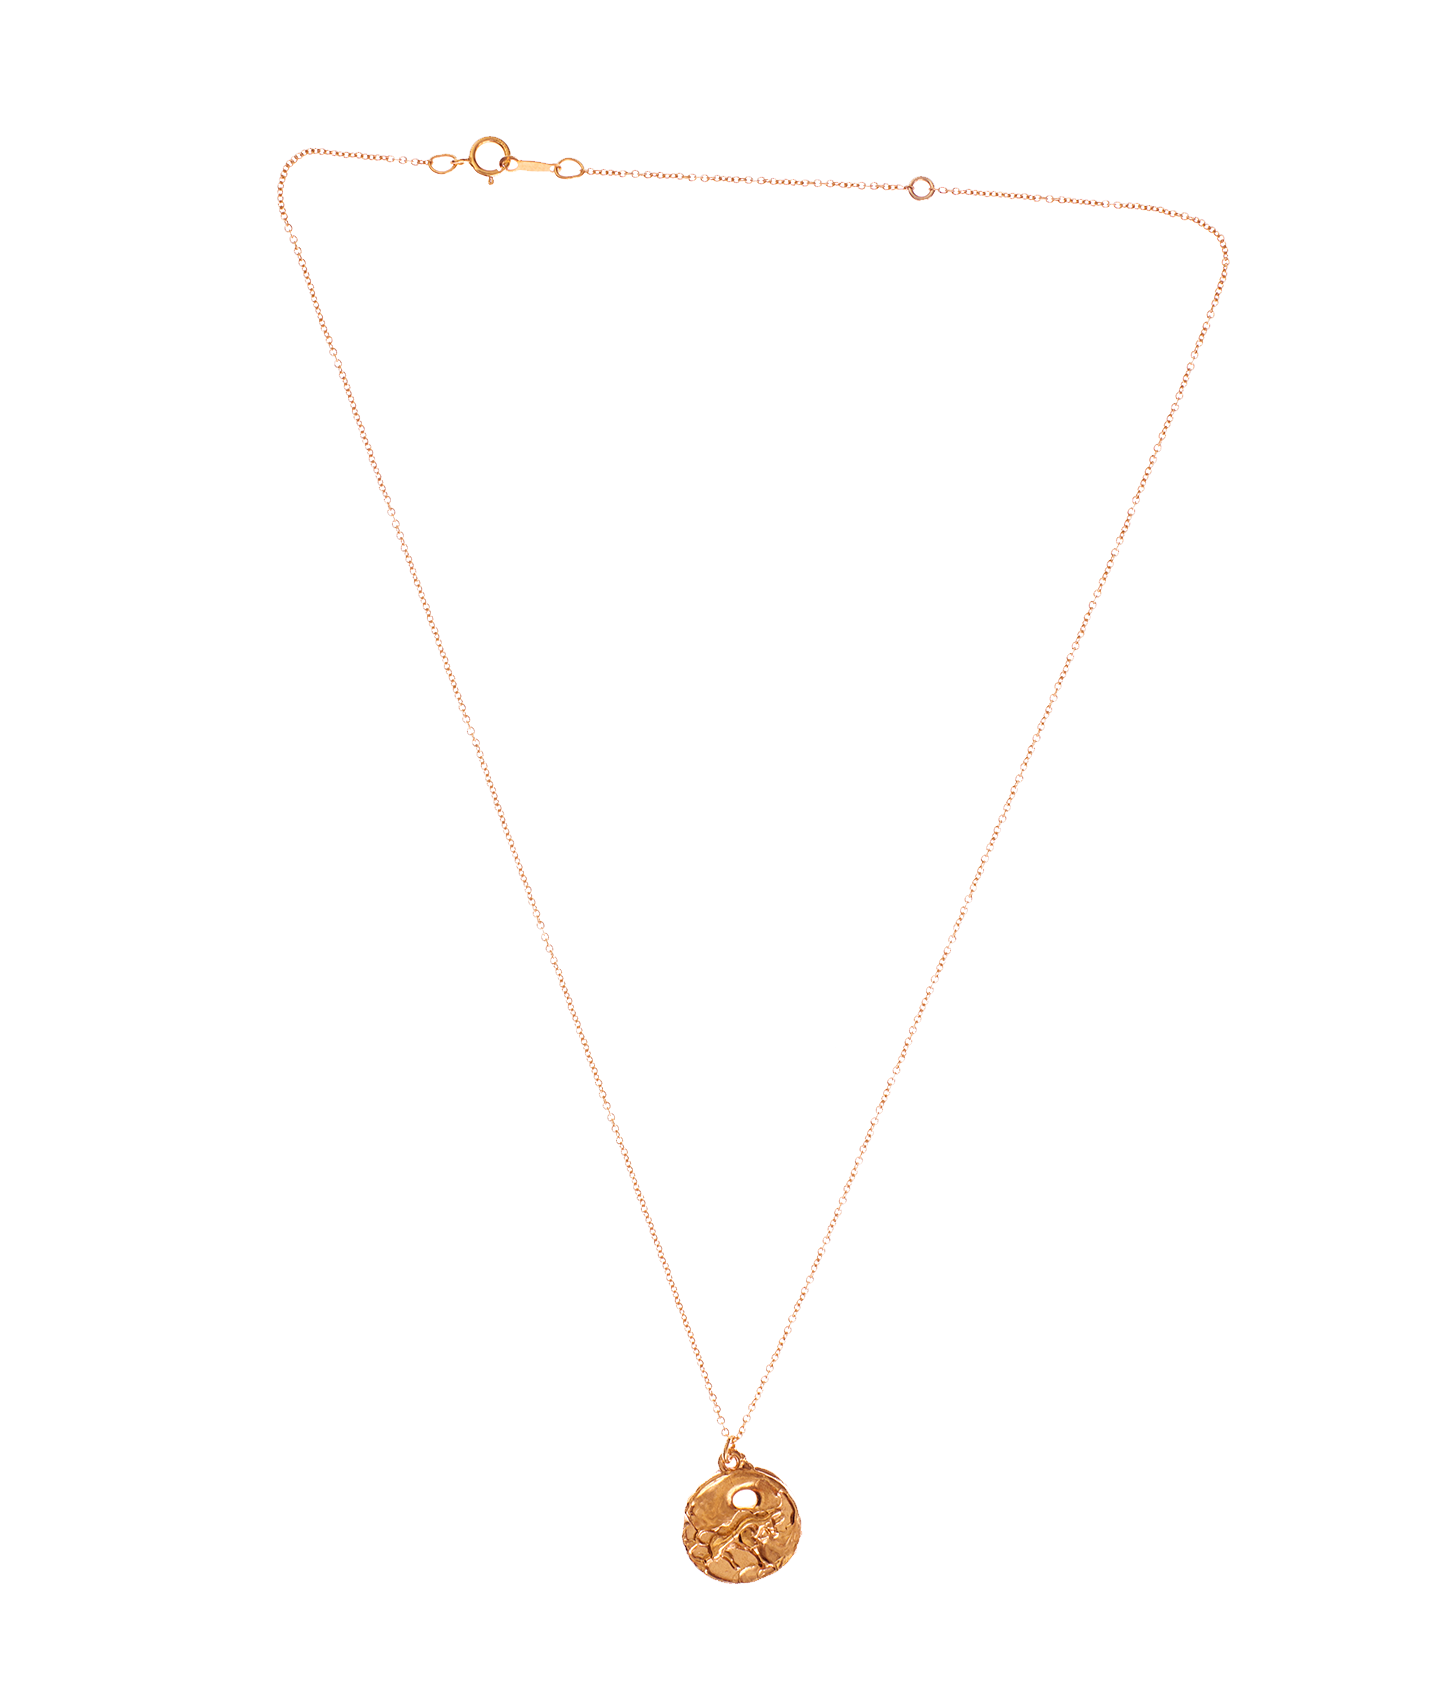 The Taurus Medallion